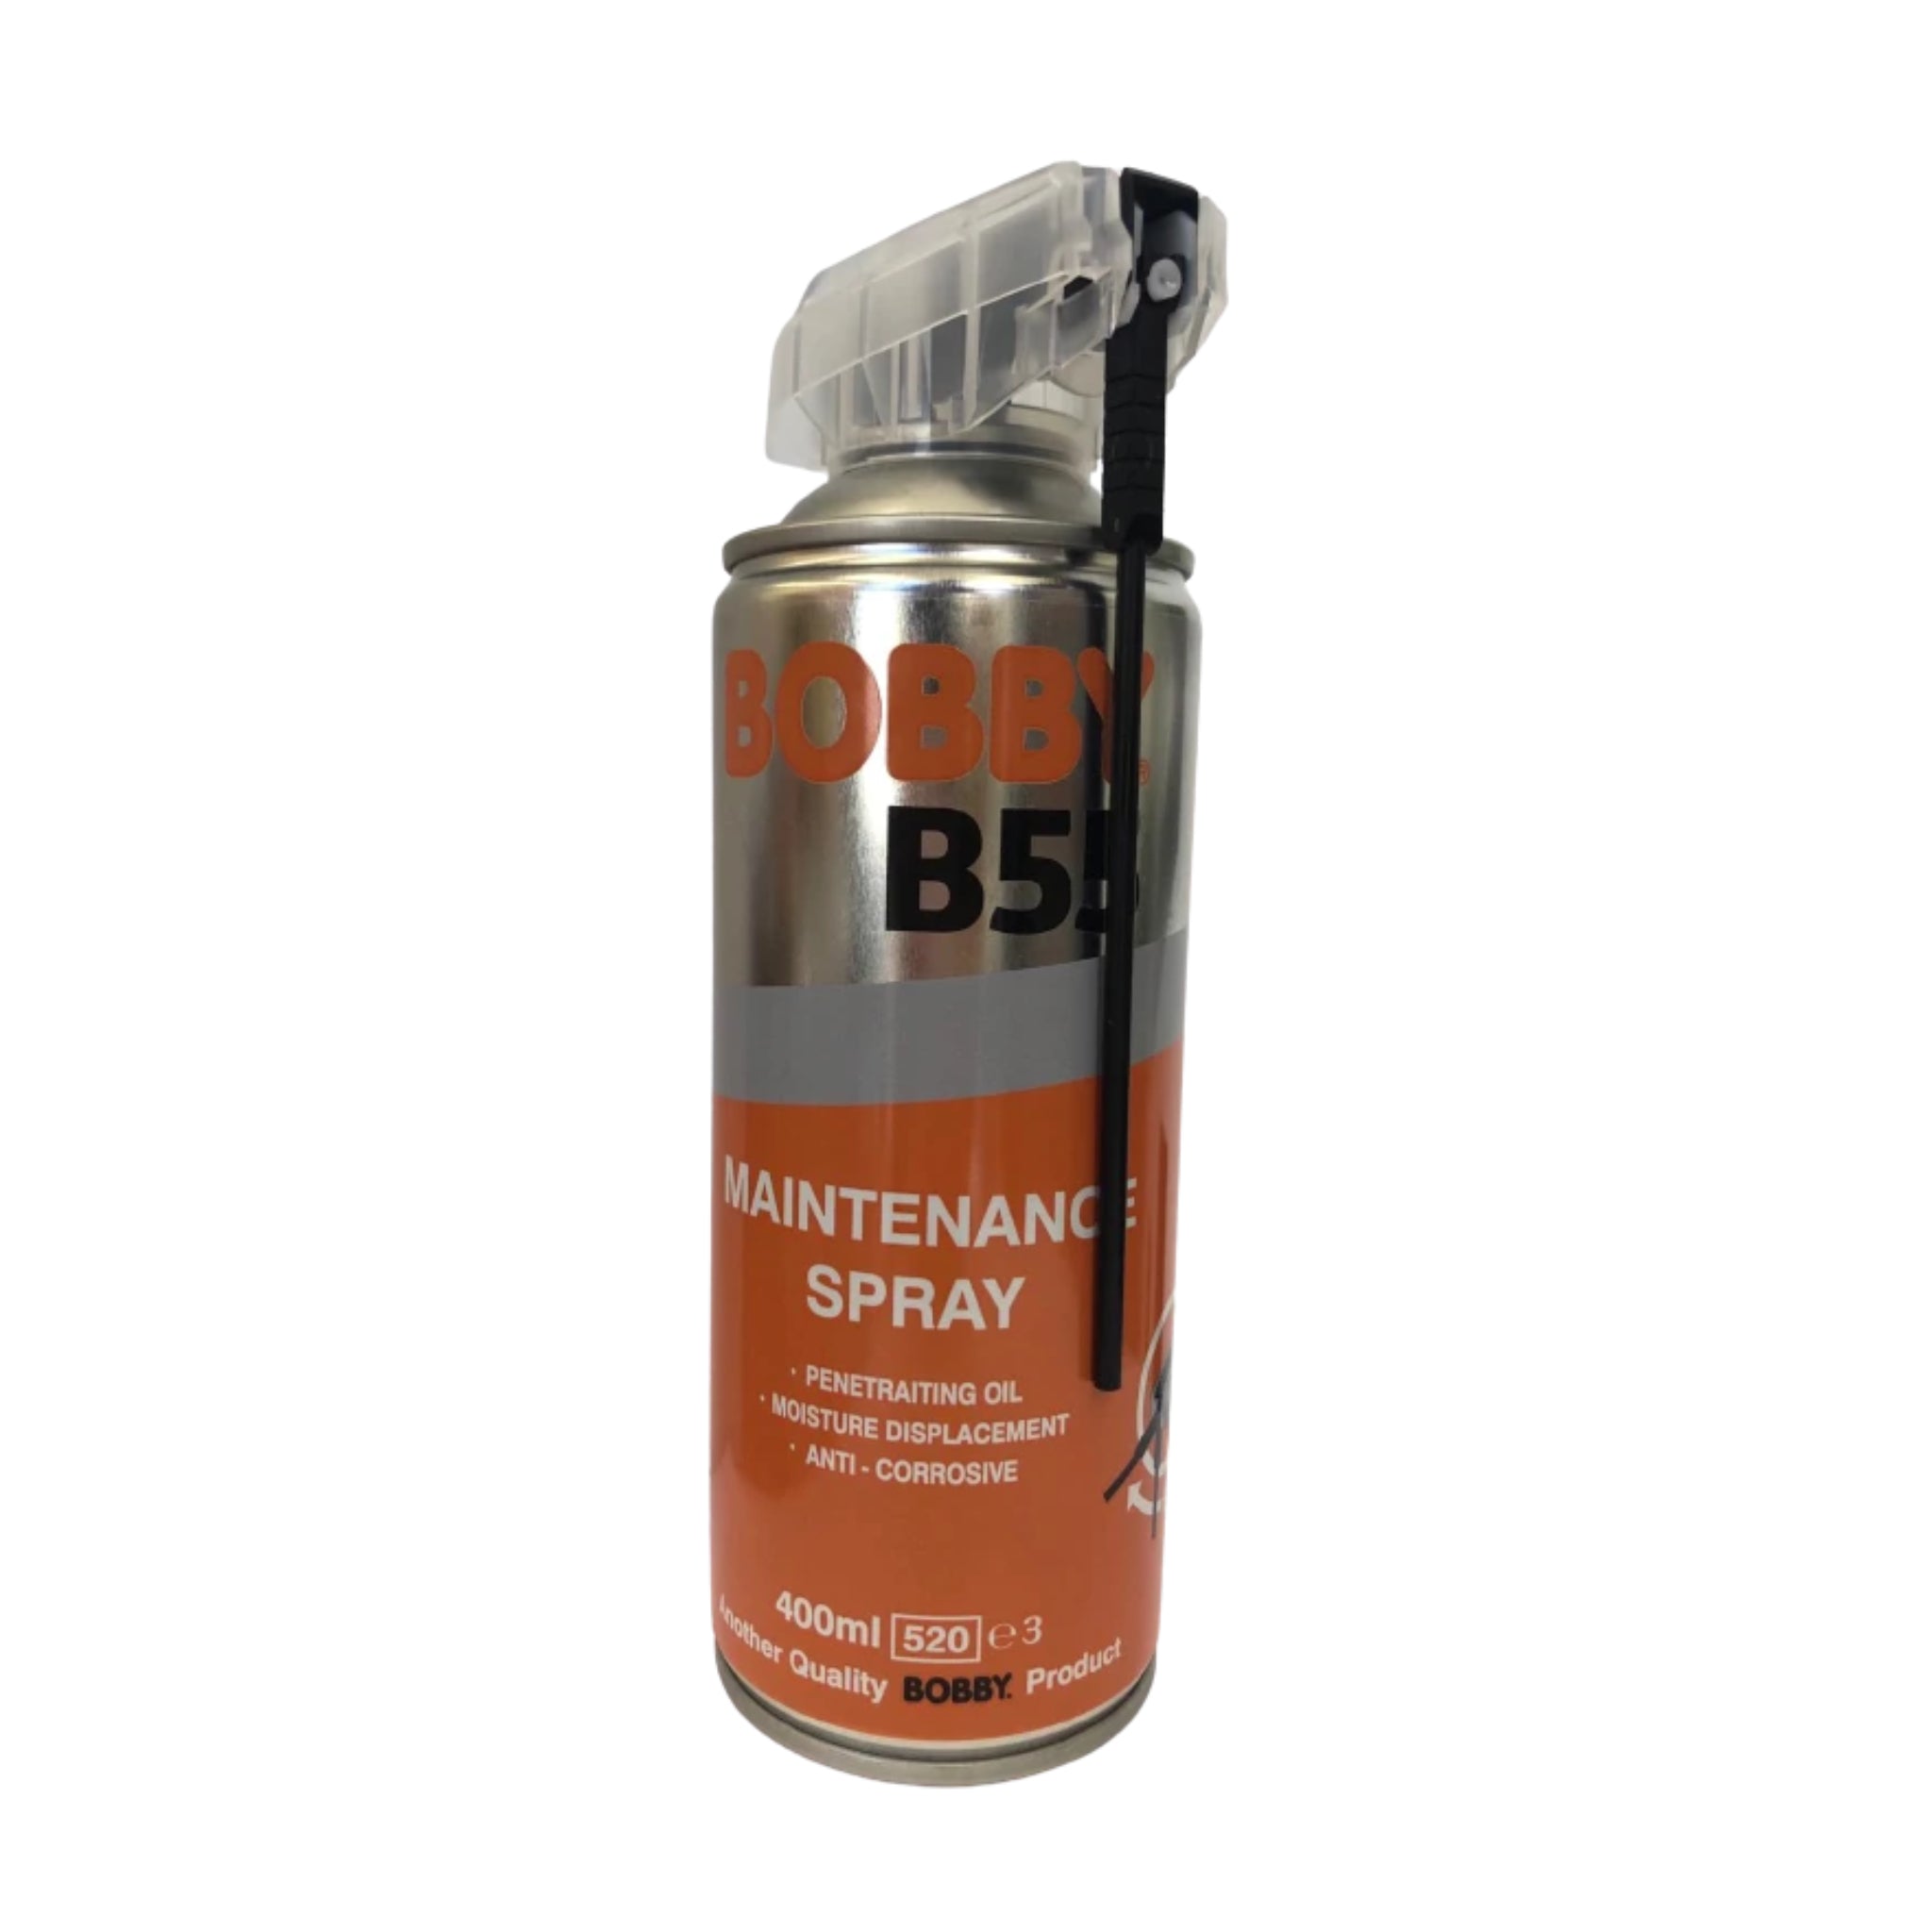 BOBBY B55 Maintenance Spray 400ML